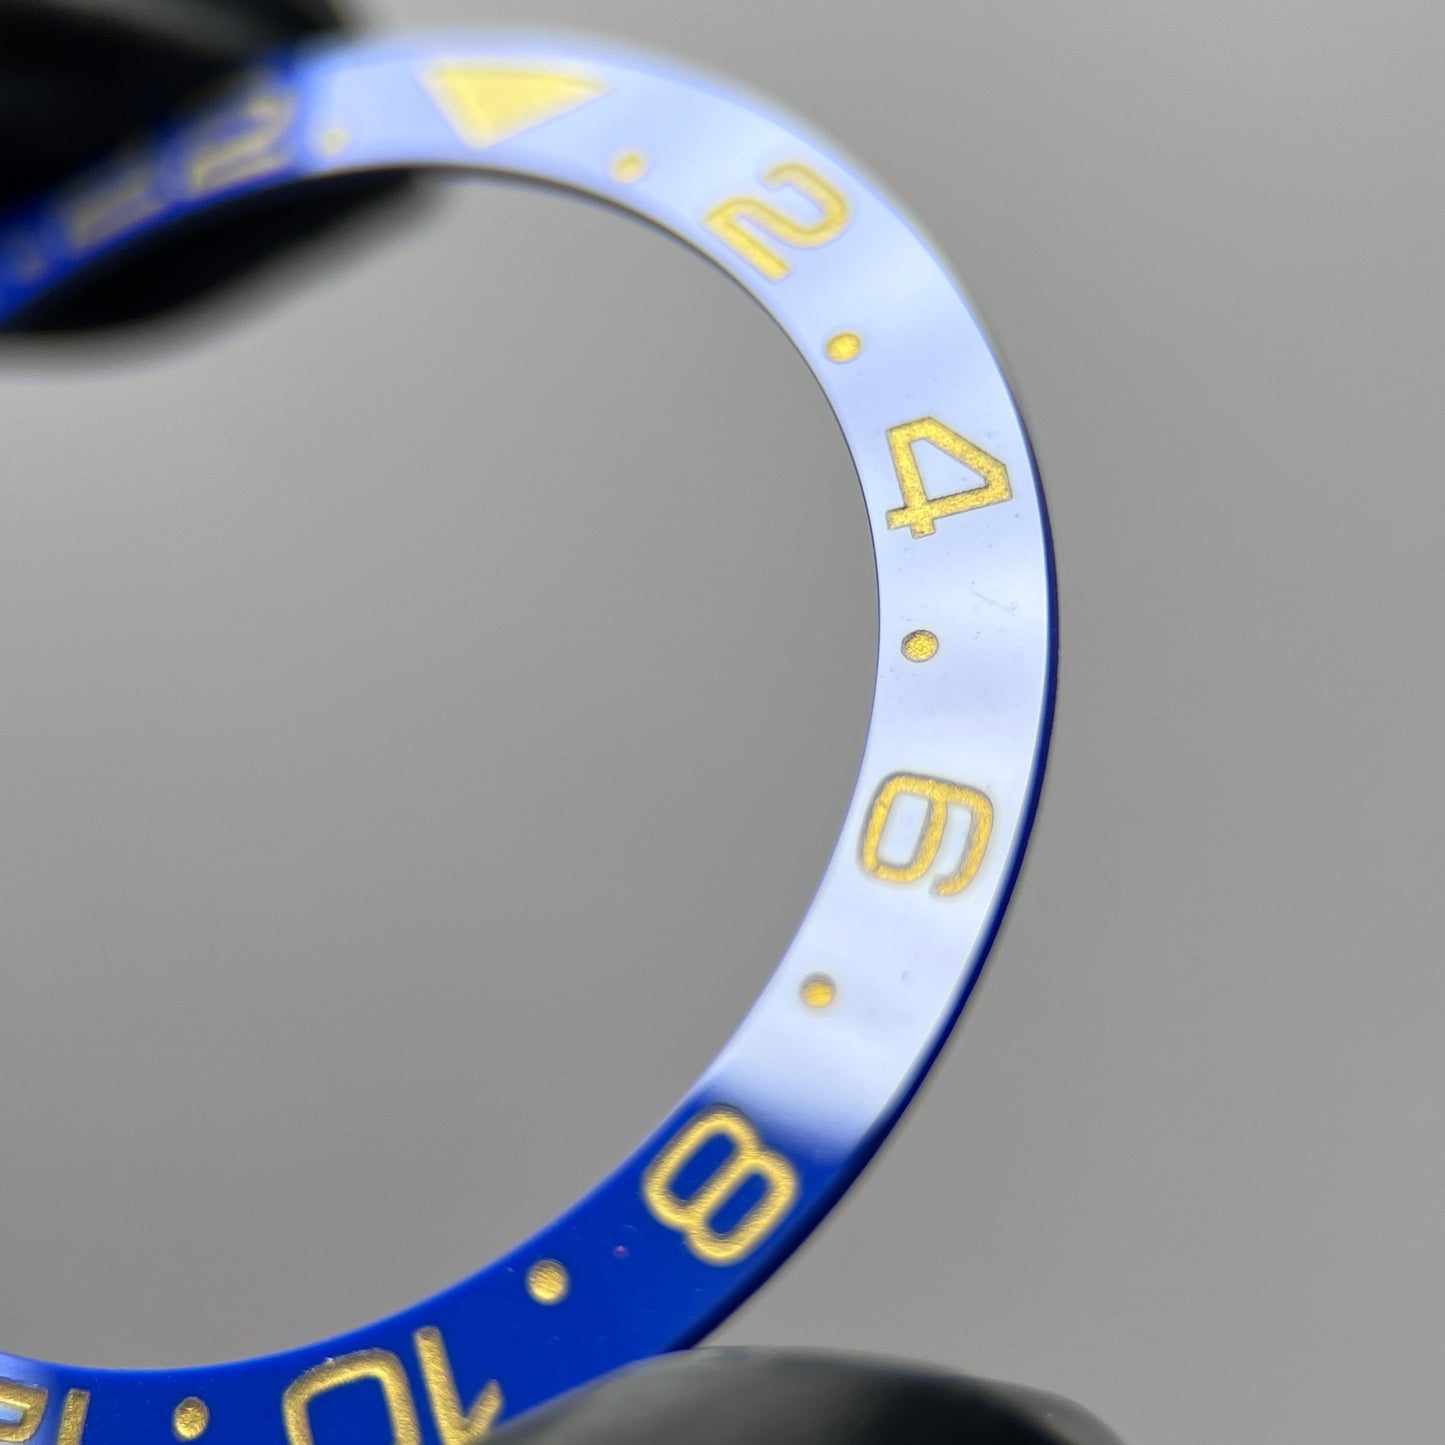 SKX007/SRPD GMT: Blue in Gold Markers